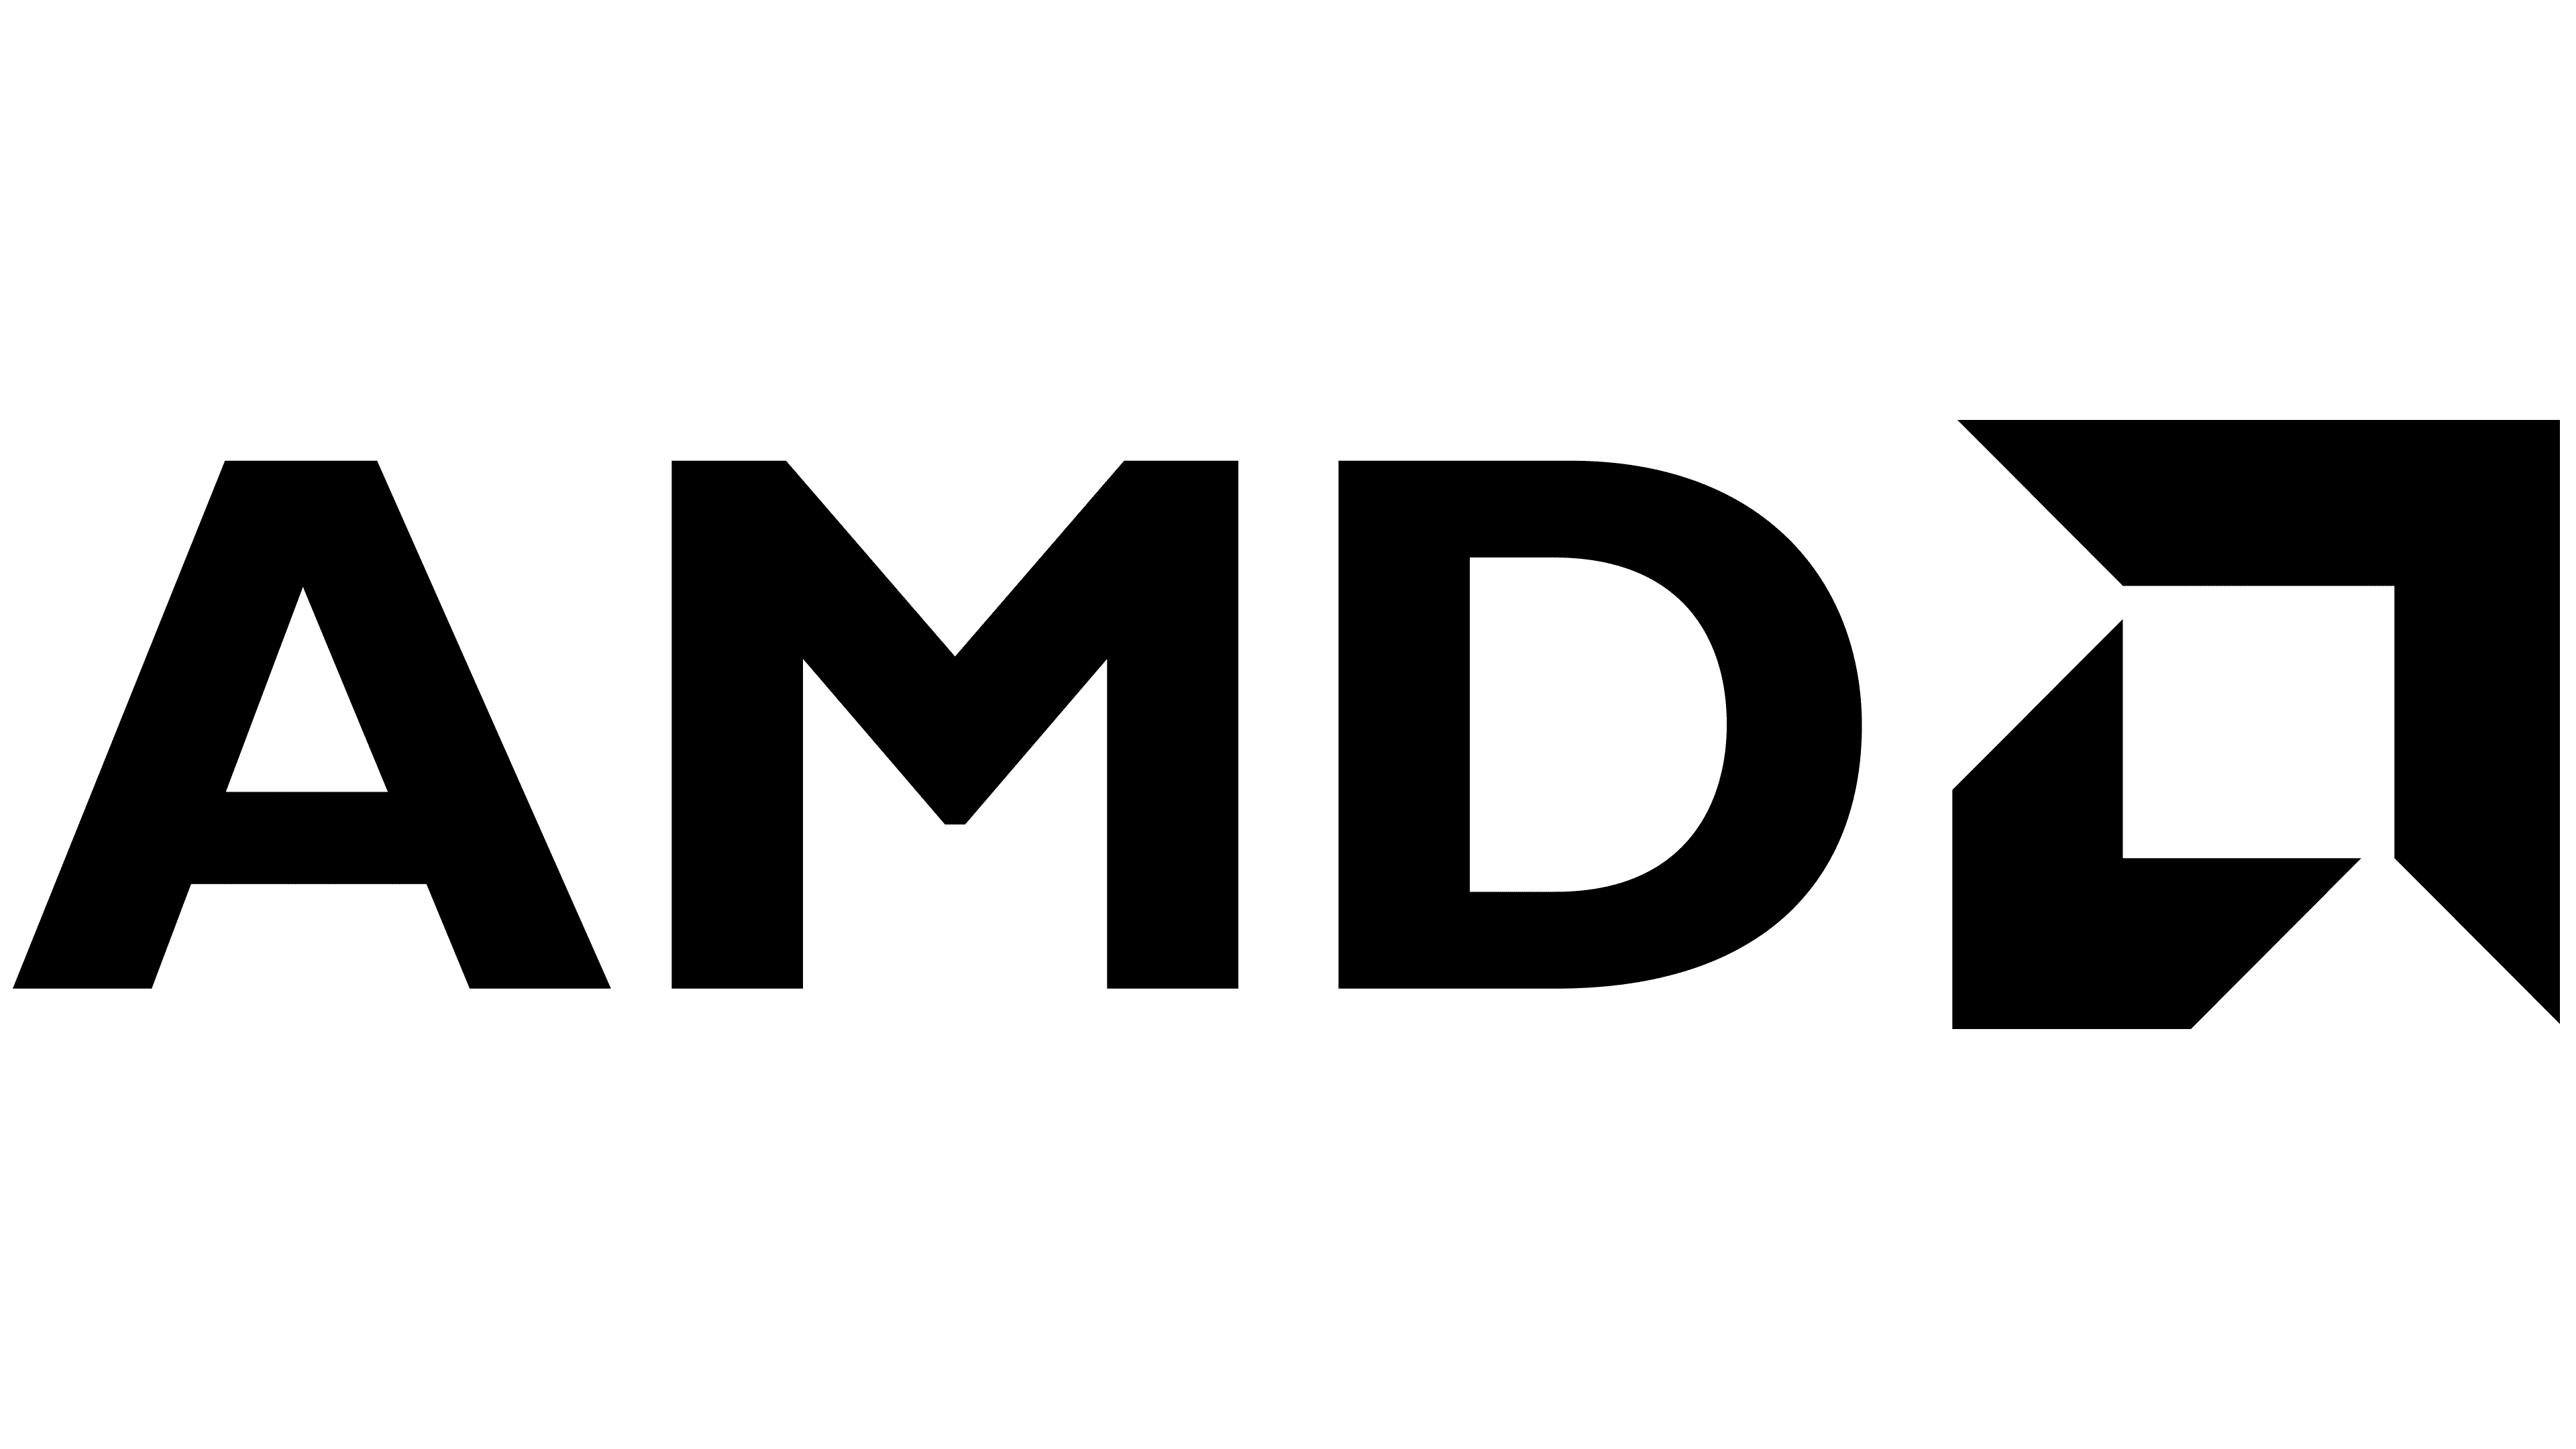 AMD Ryzen 7 5800X Vermeer 8-Core 3.80GHz AM4 105W 100-100000063WOF